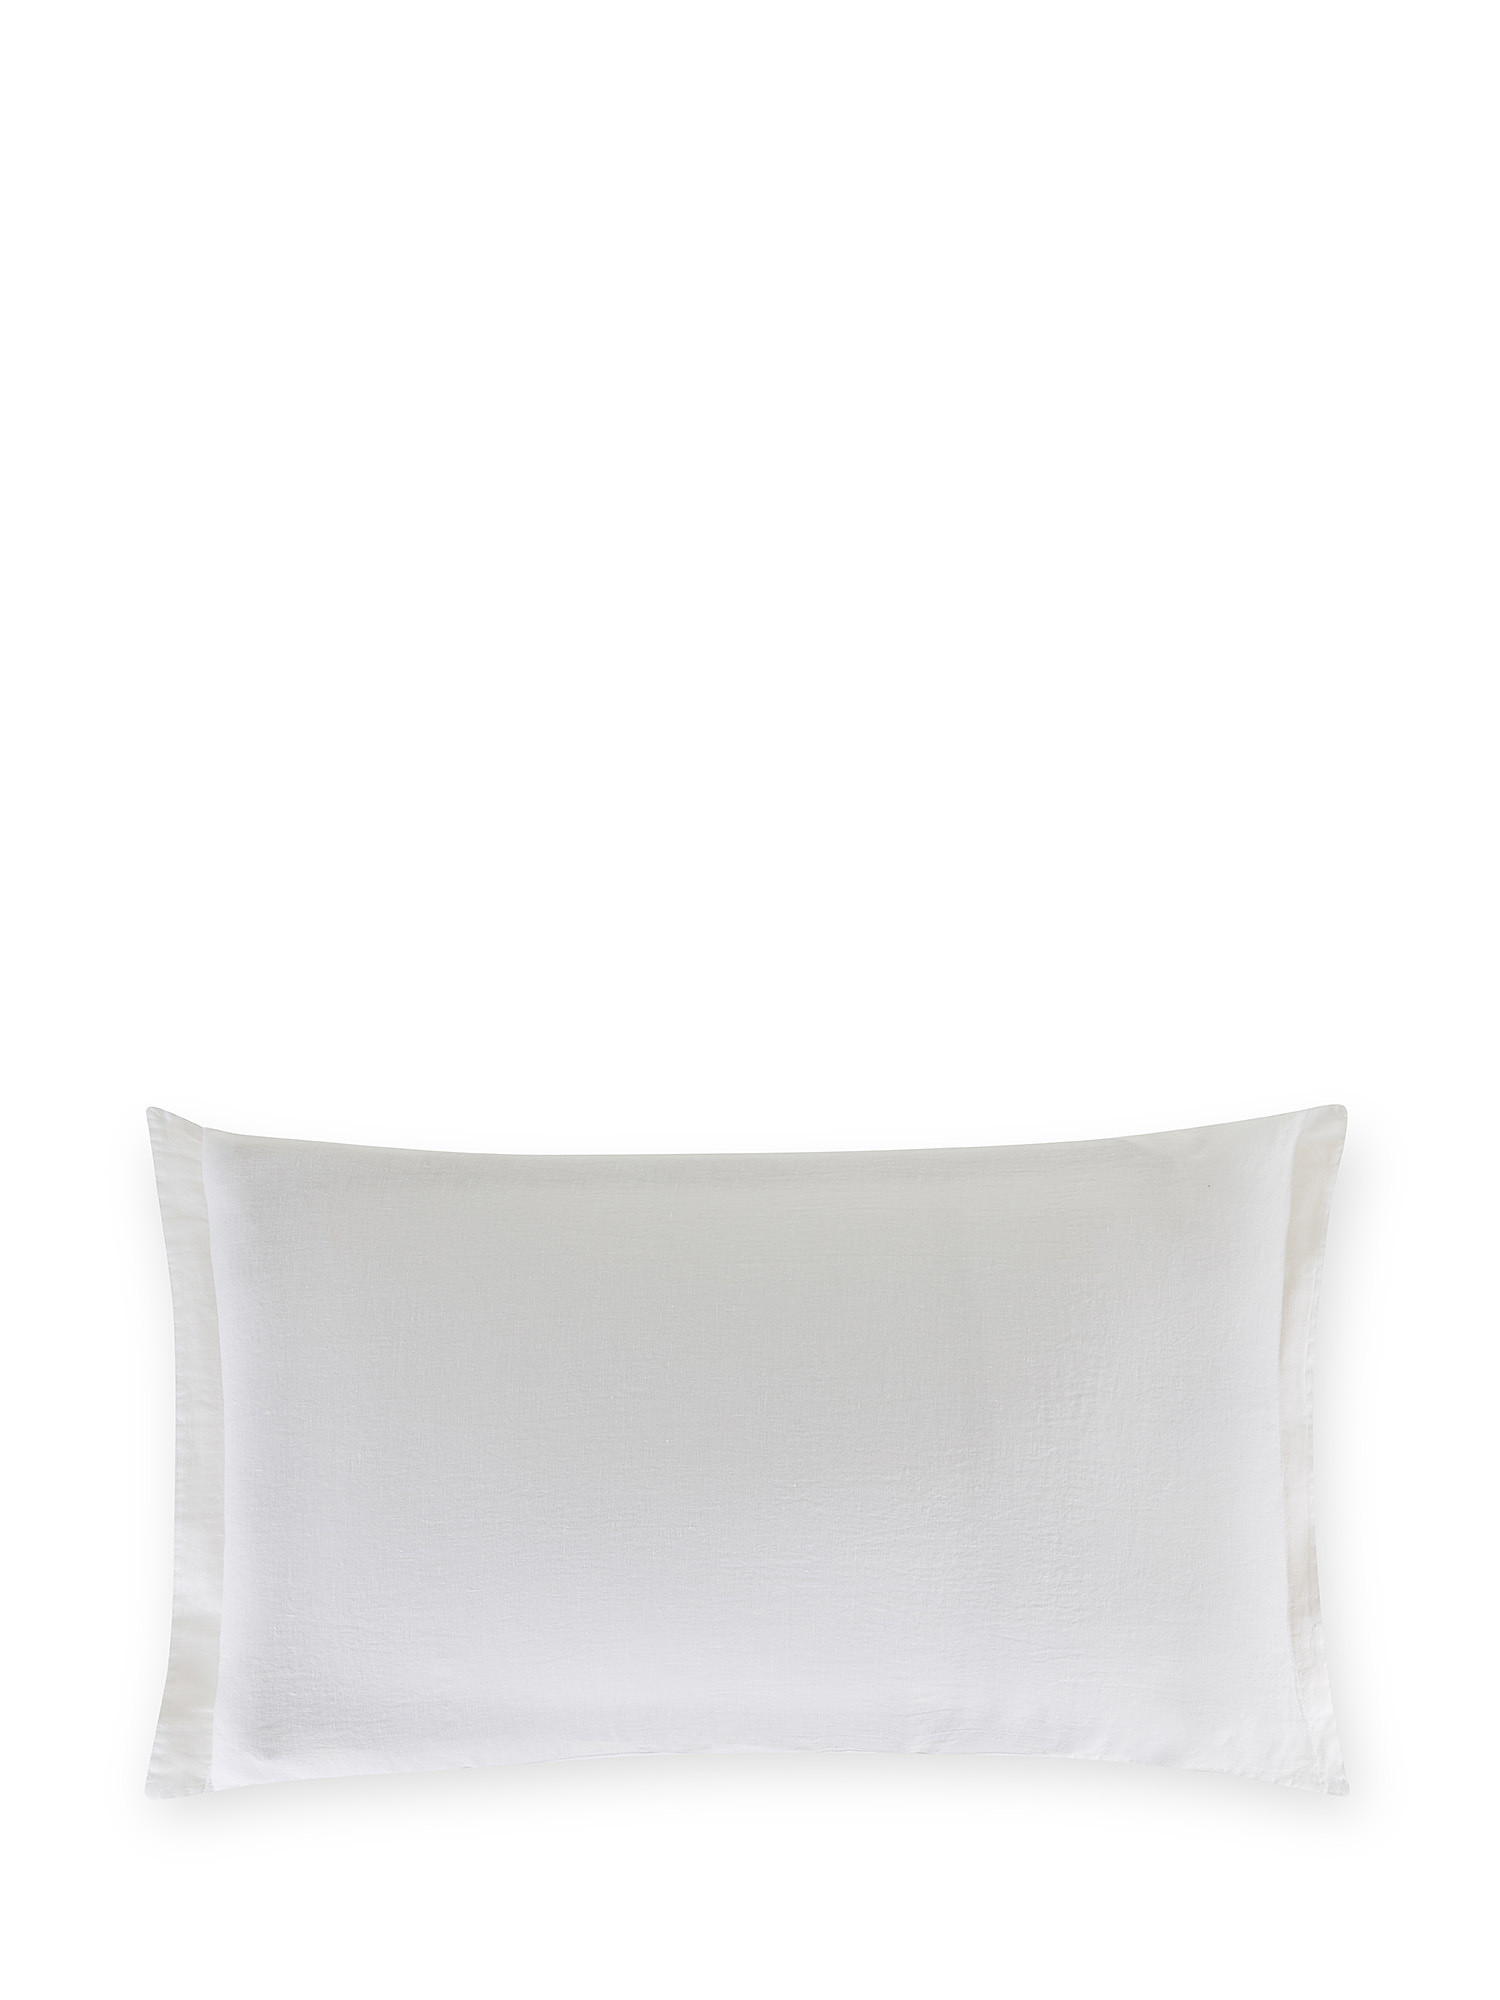 Zefiro plain color linen and cotton pillowcase, White, large image number 0